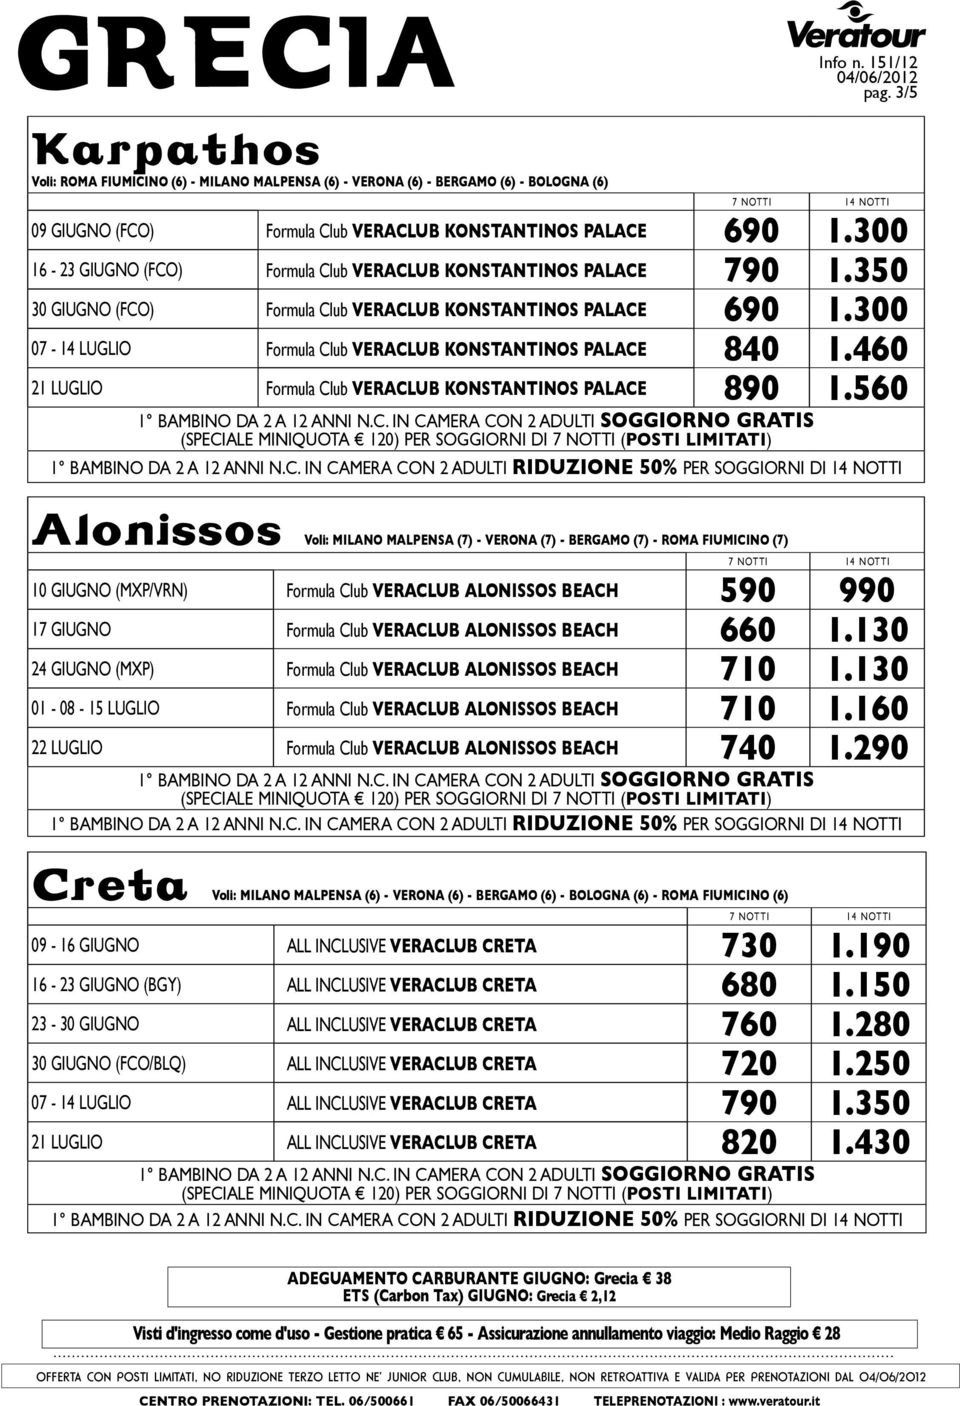 300 07-14 LUGLIO Formula Club veraclub konstantinos palace 840 1.460 21 LUGLIO Formula Club veraclub konstantinos palace 890 1.